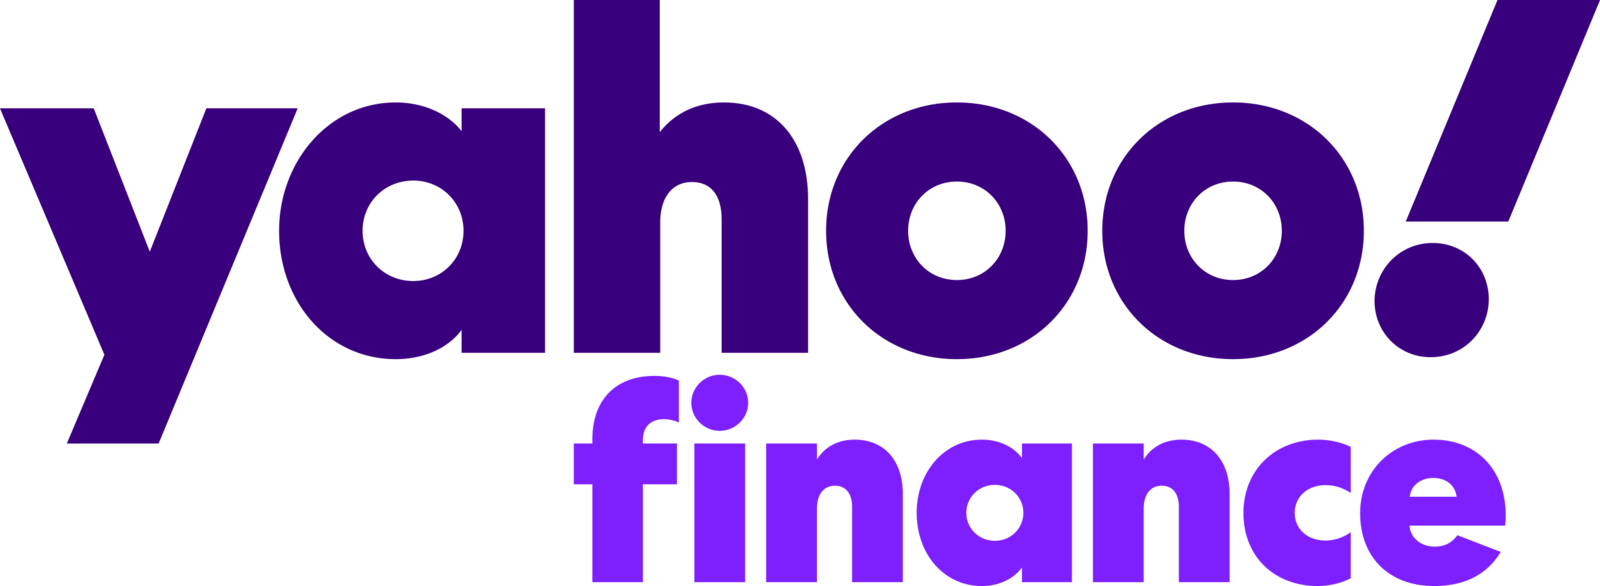 Yahoo Finance and inSure DeFi